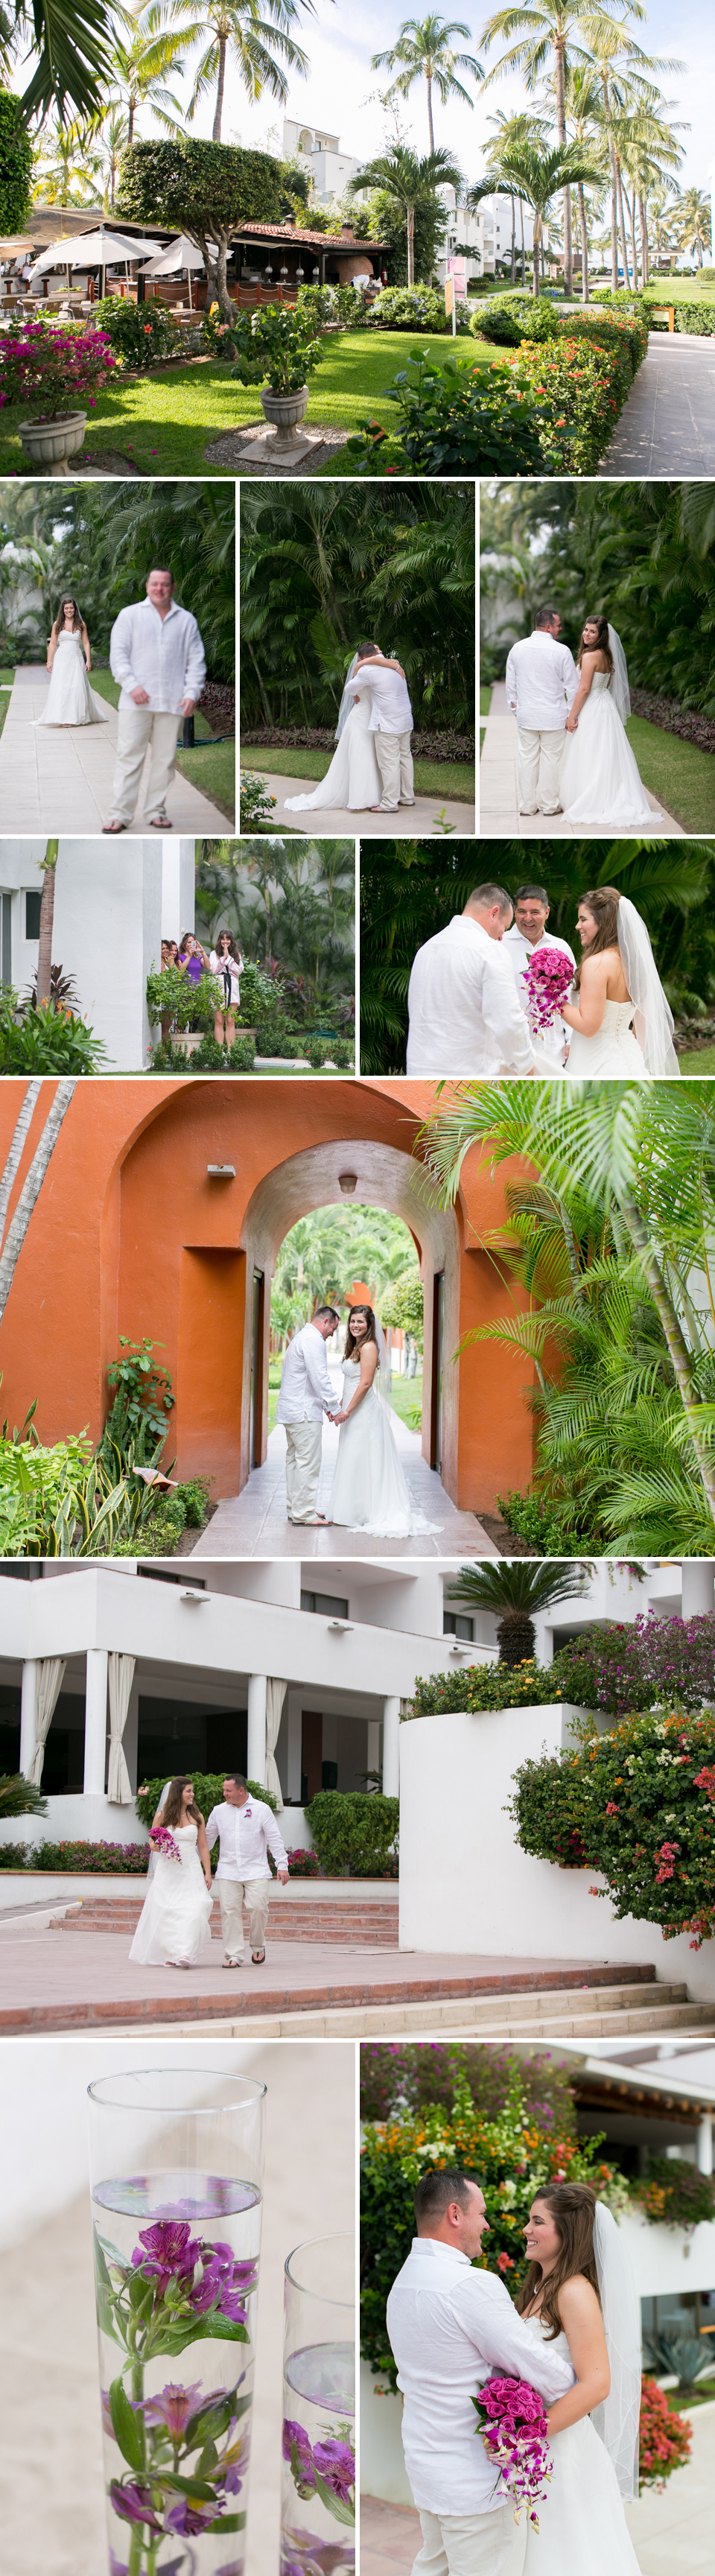 Puerto Vallarta Mexico wedding, Destination wedding photographer, Jana Marie Photography, travel photographer